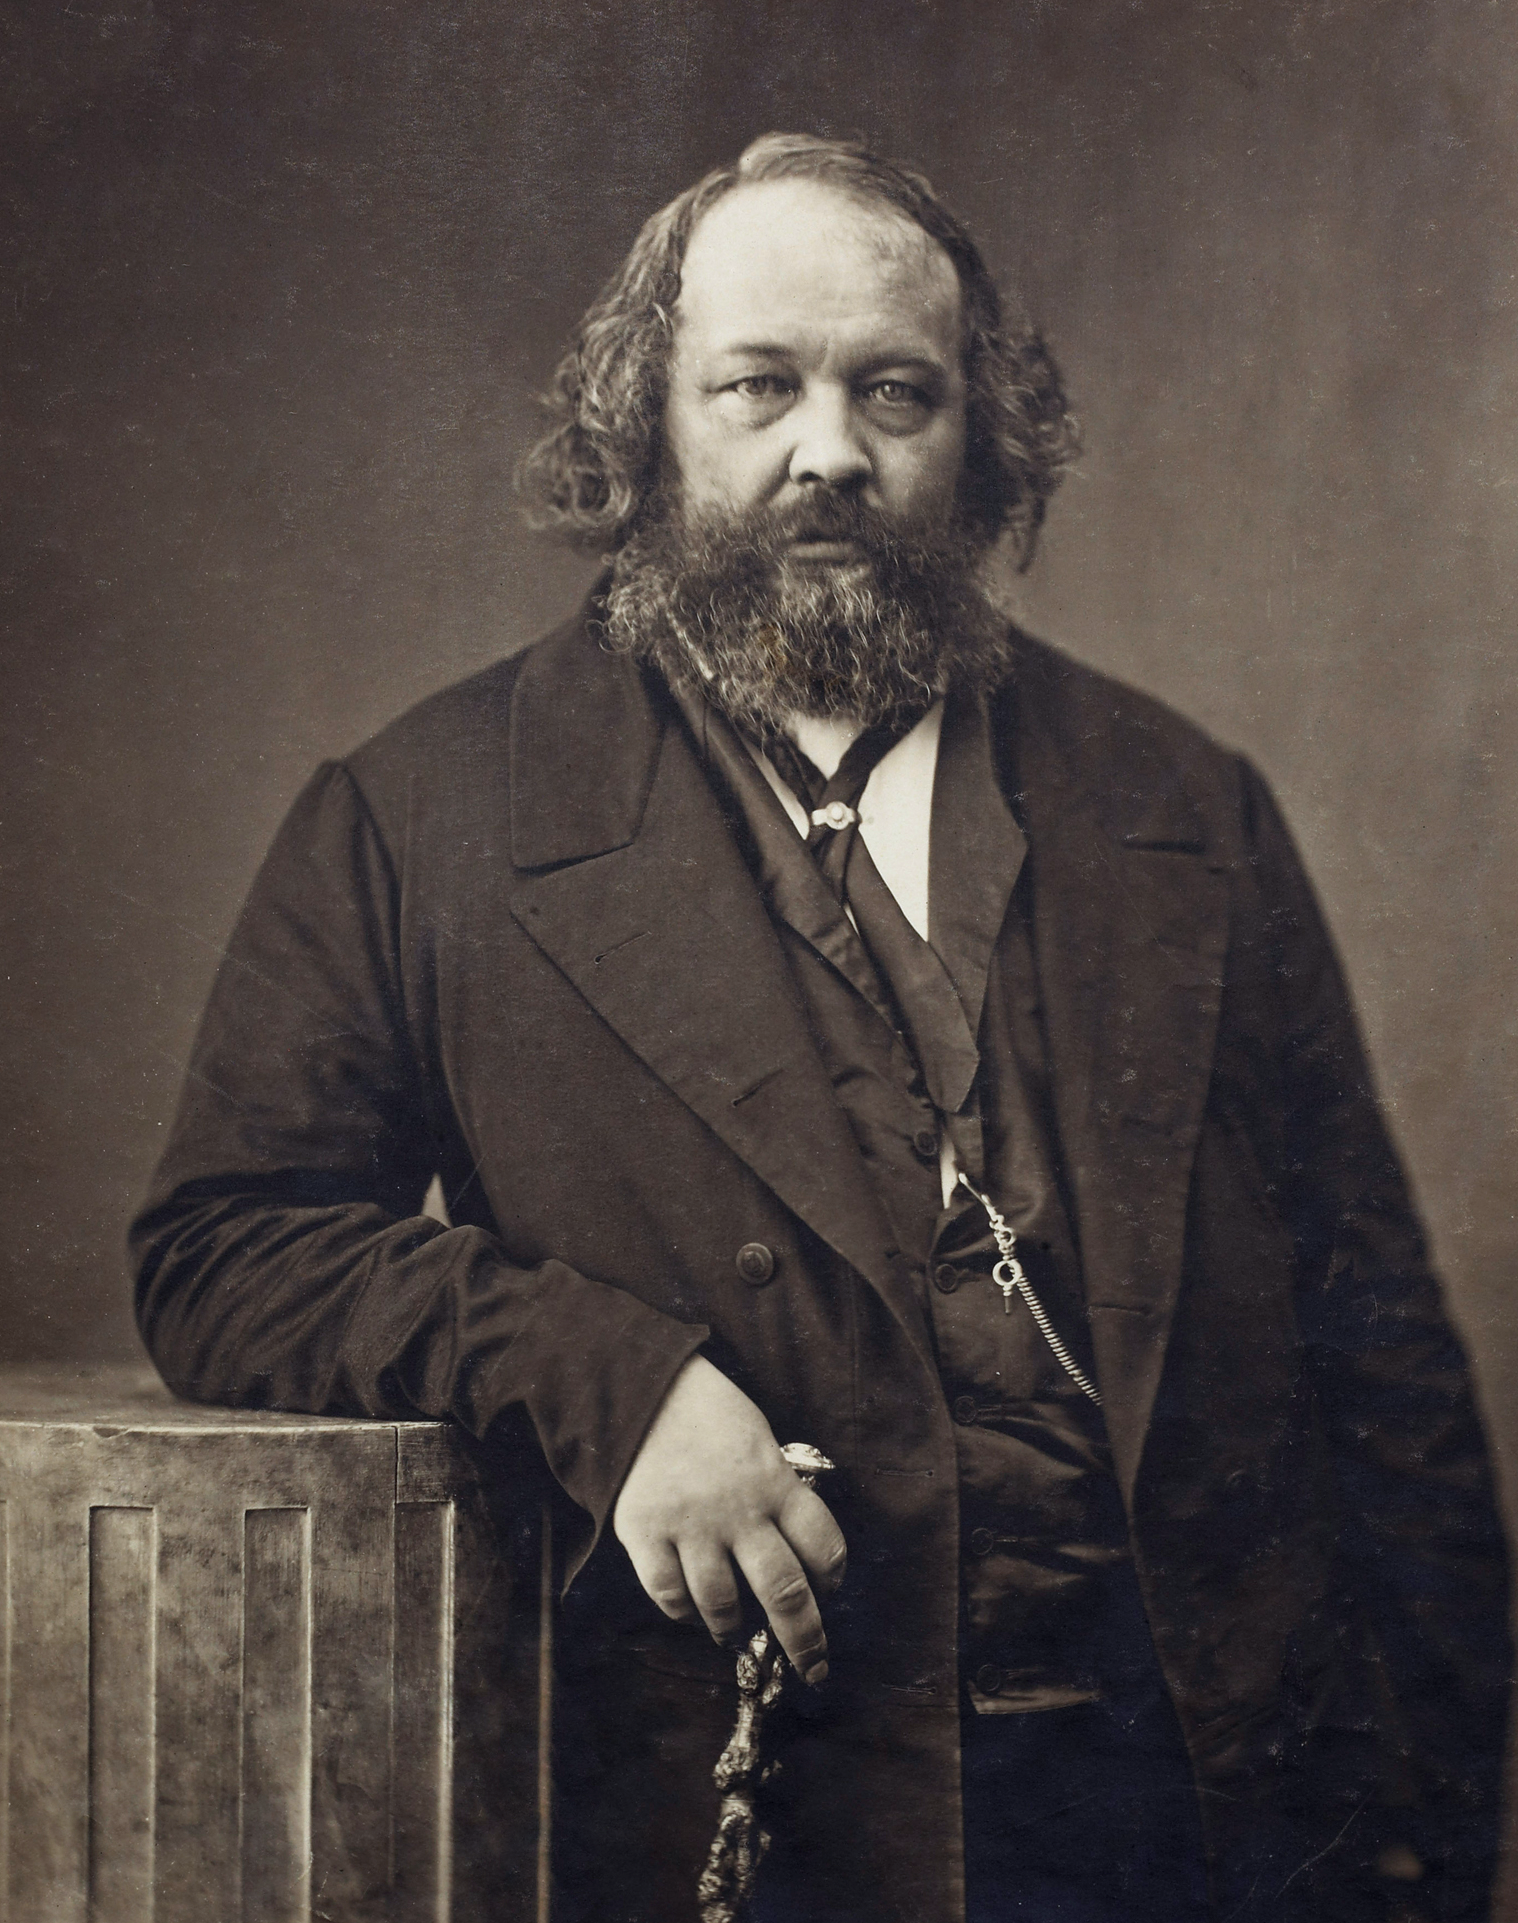 Russian Anarchist Mikhail Bakunin, c. 1860.